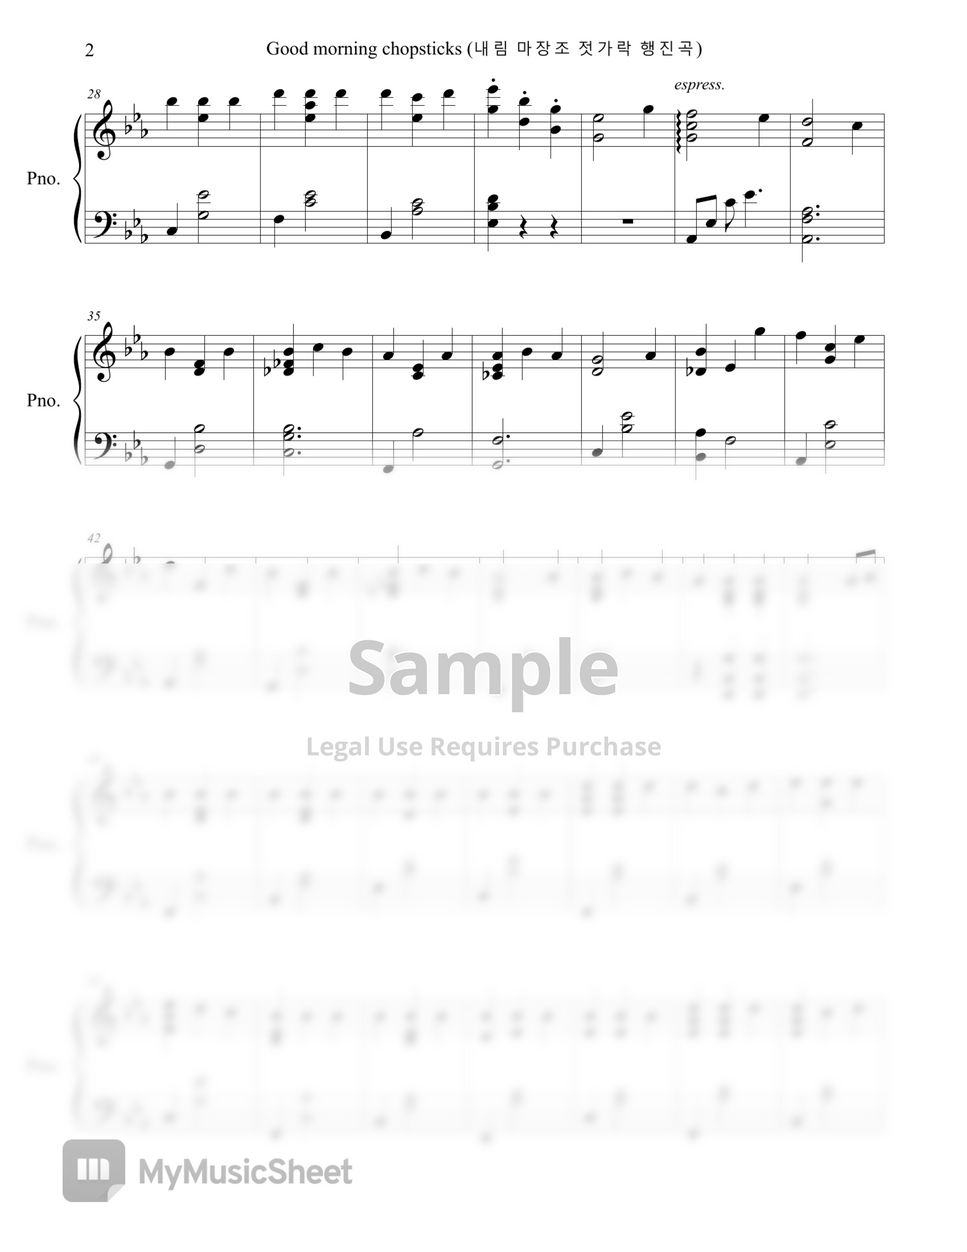 Pianist Keunyoung Song(송근영) - 클래식 명곡 피아노 연주곡 모음 1 (Classic Piano Collection 1) by Pianist Keunyoung Song